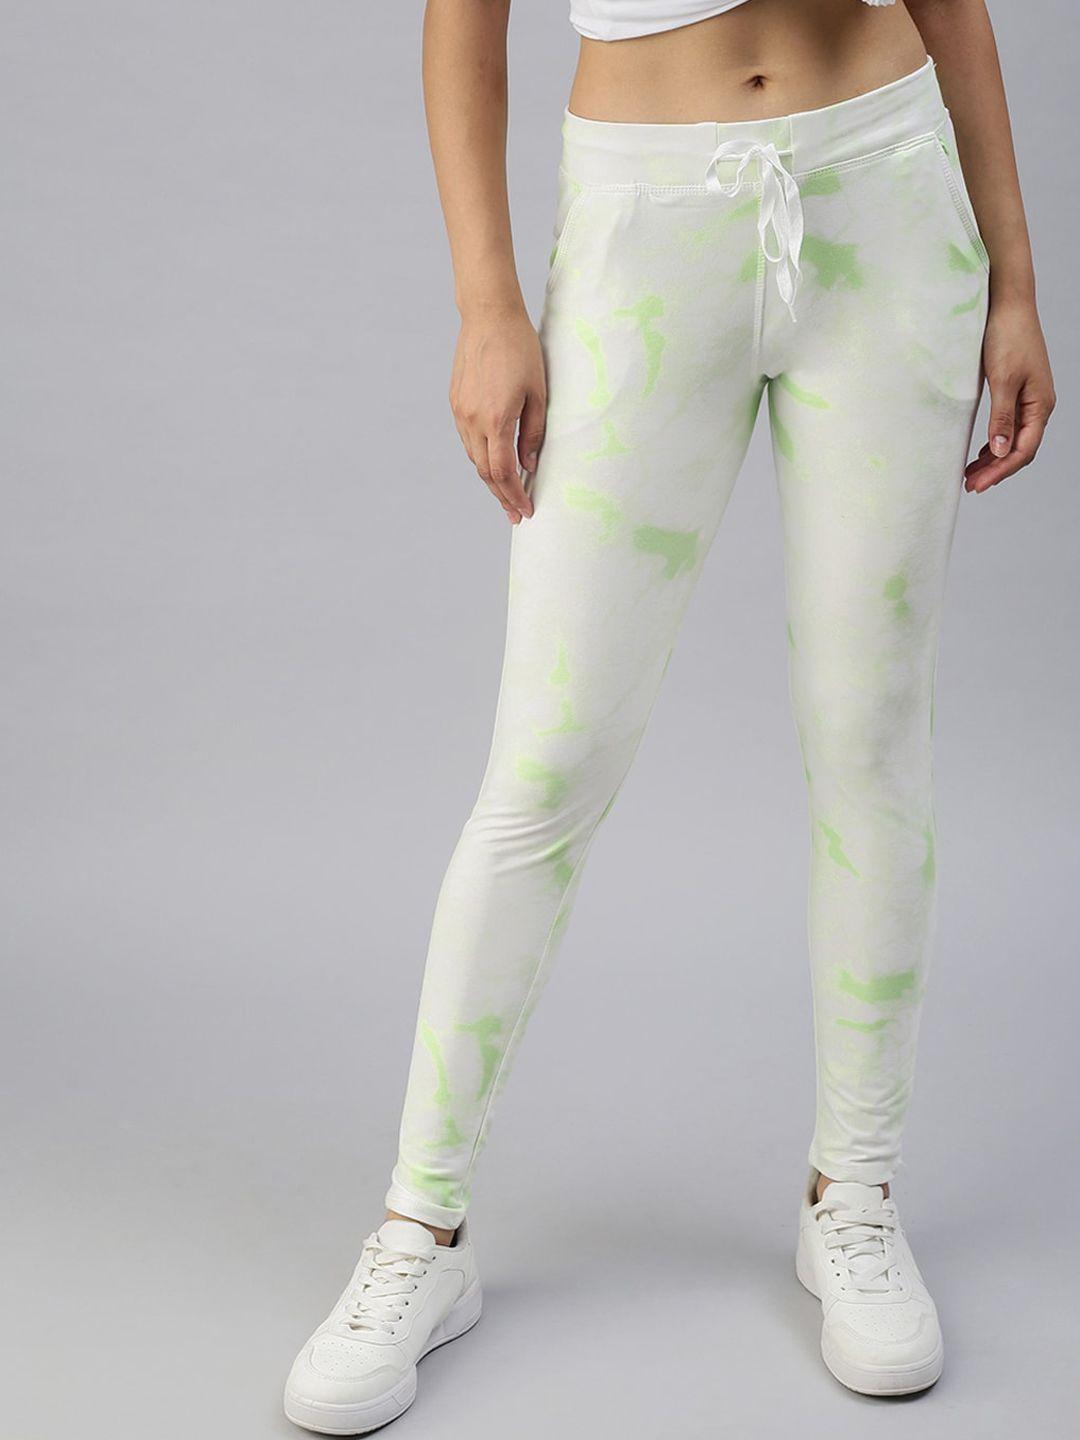 showoff-women-white-&-green-tie-&-dye-printed-cotton-track-pants